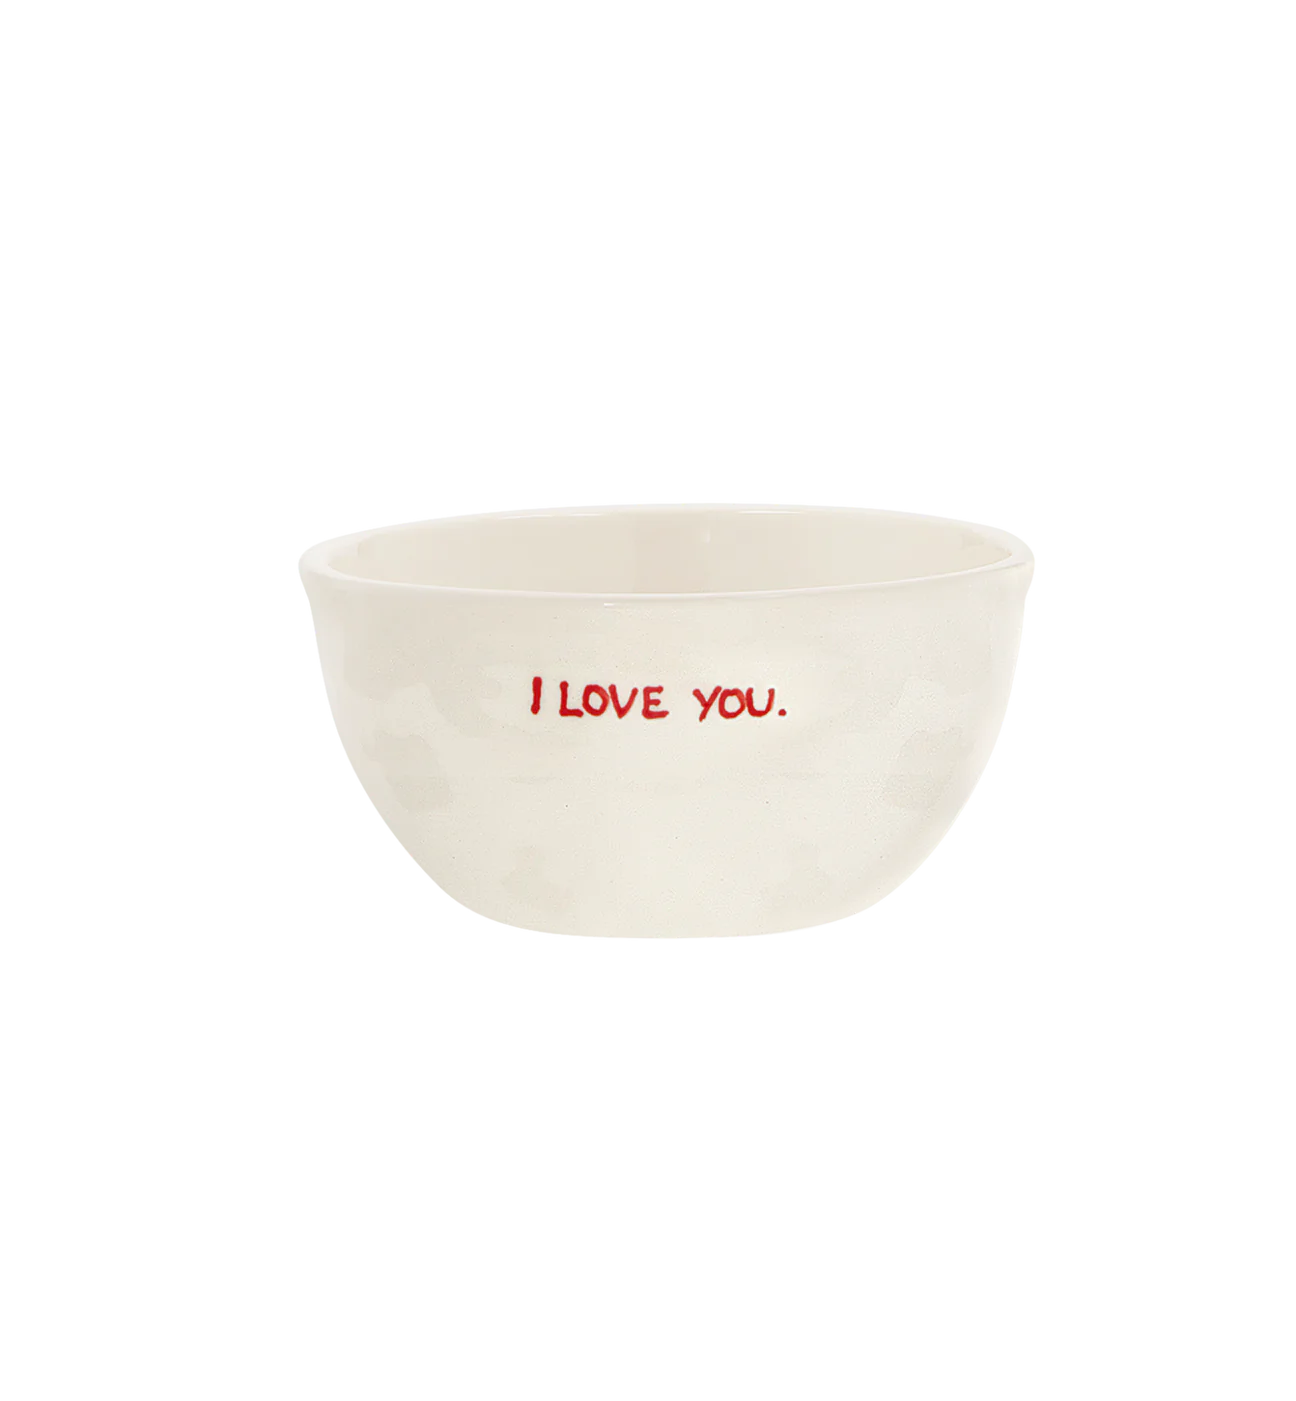 Bowl "I love you"